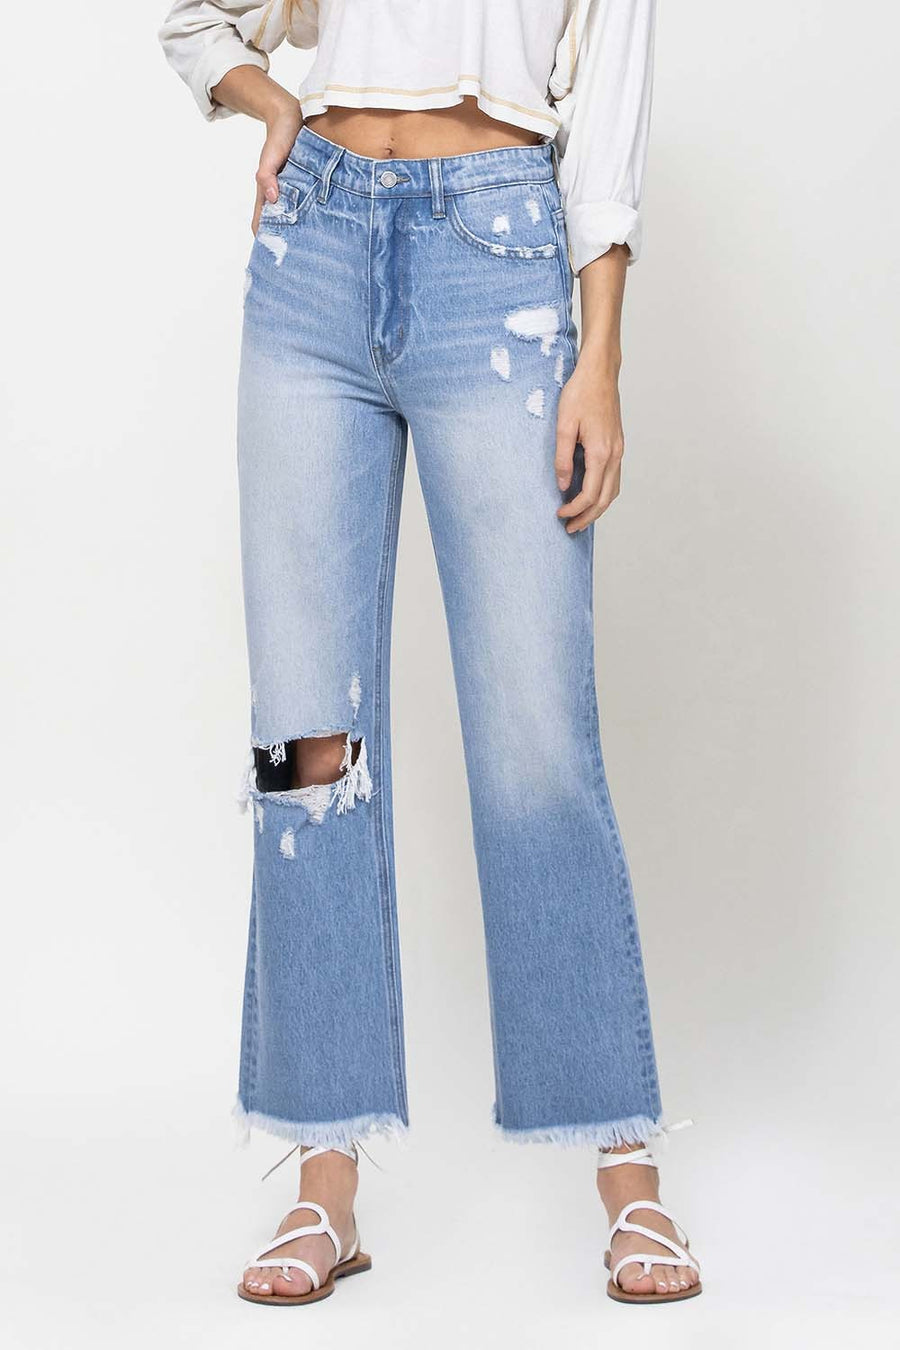 Georgia Twilight Jeans